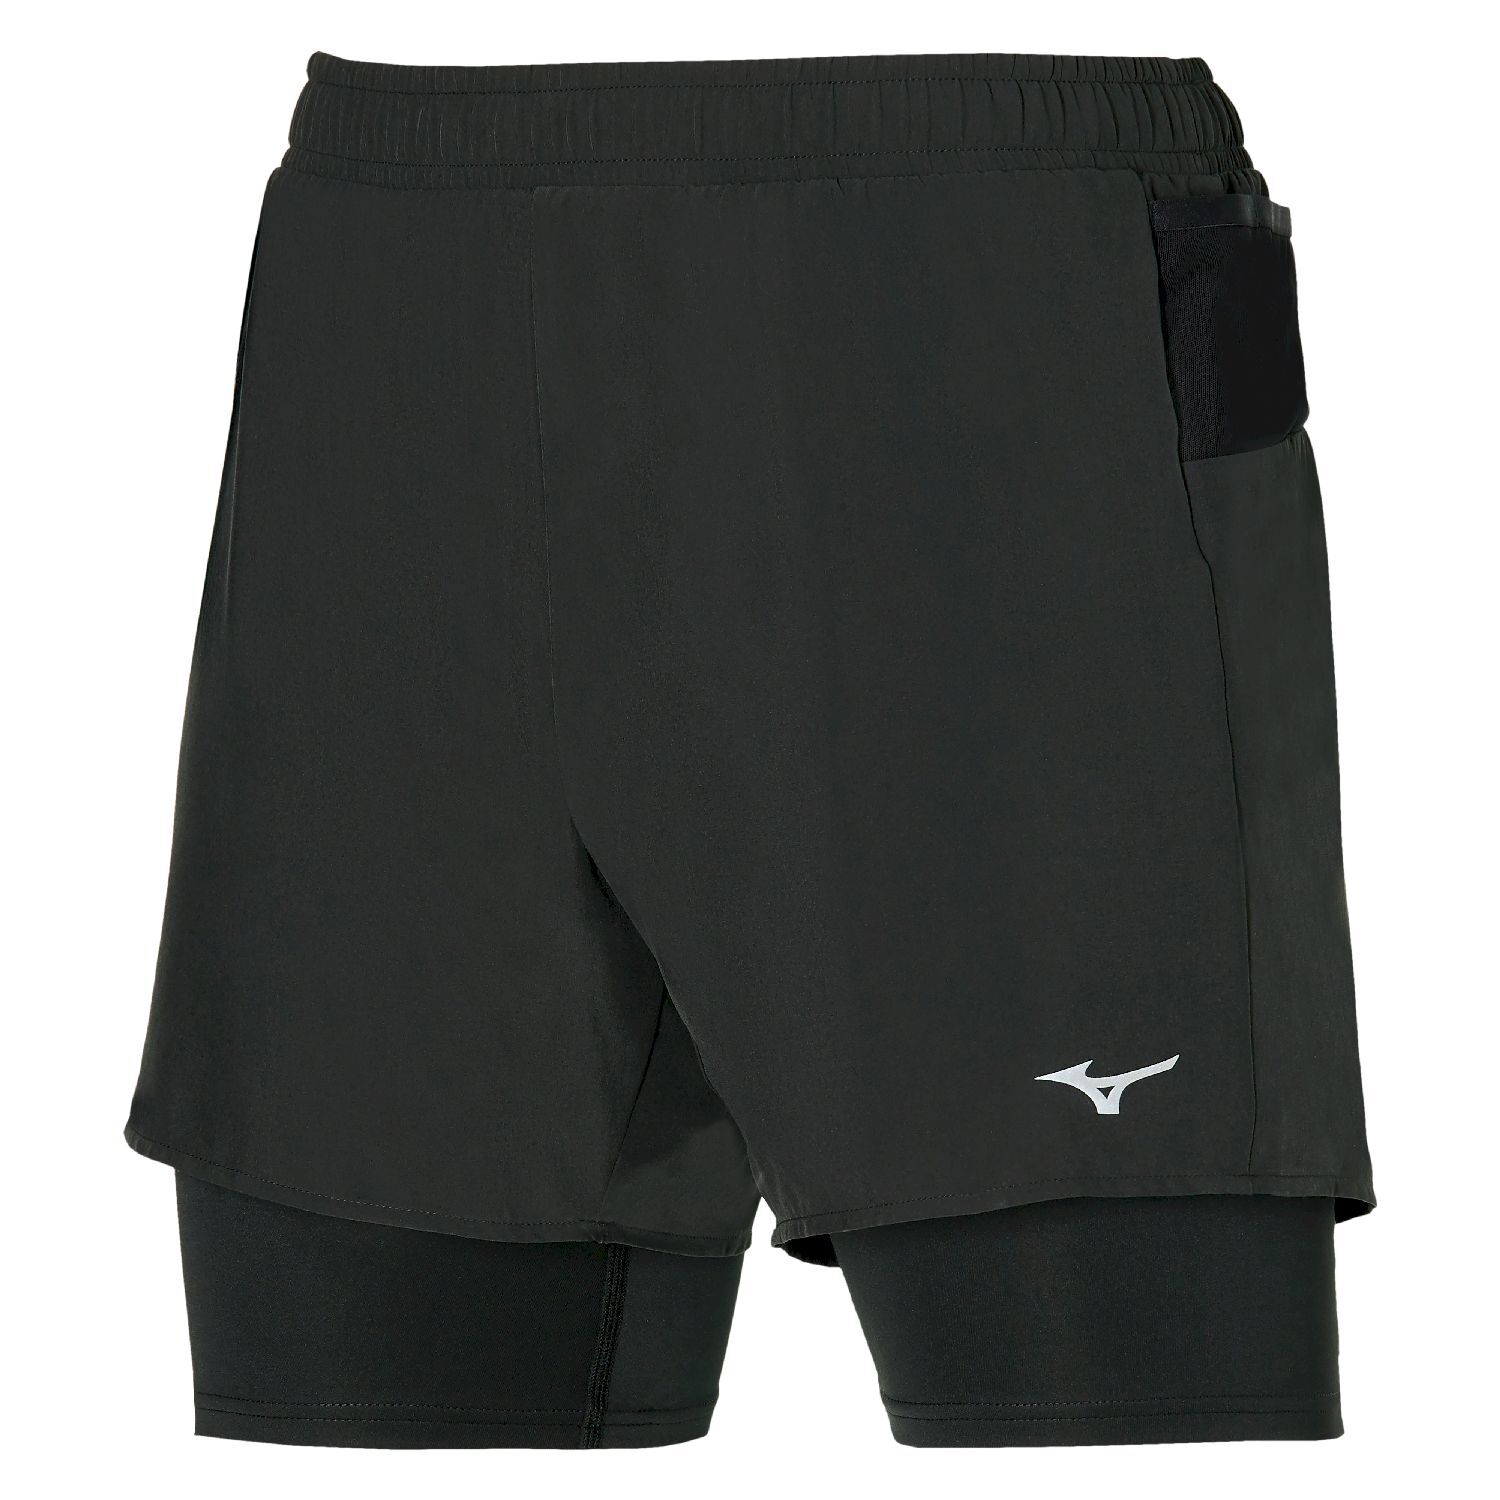 Mizuno ER 5.5 2In1 Short - Running shorts - Men's